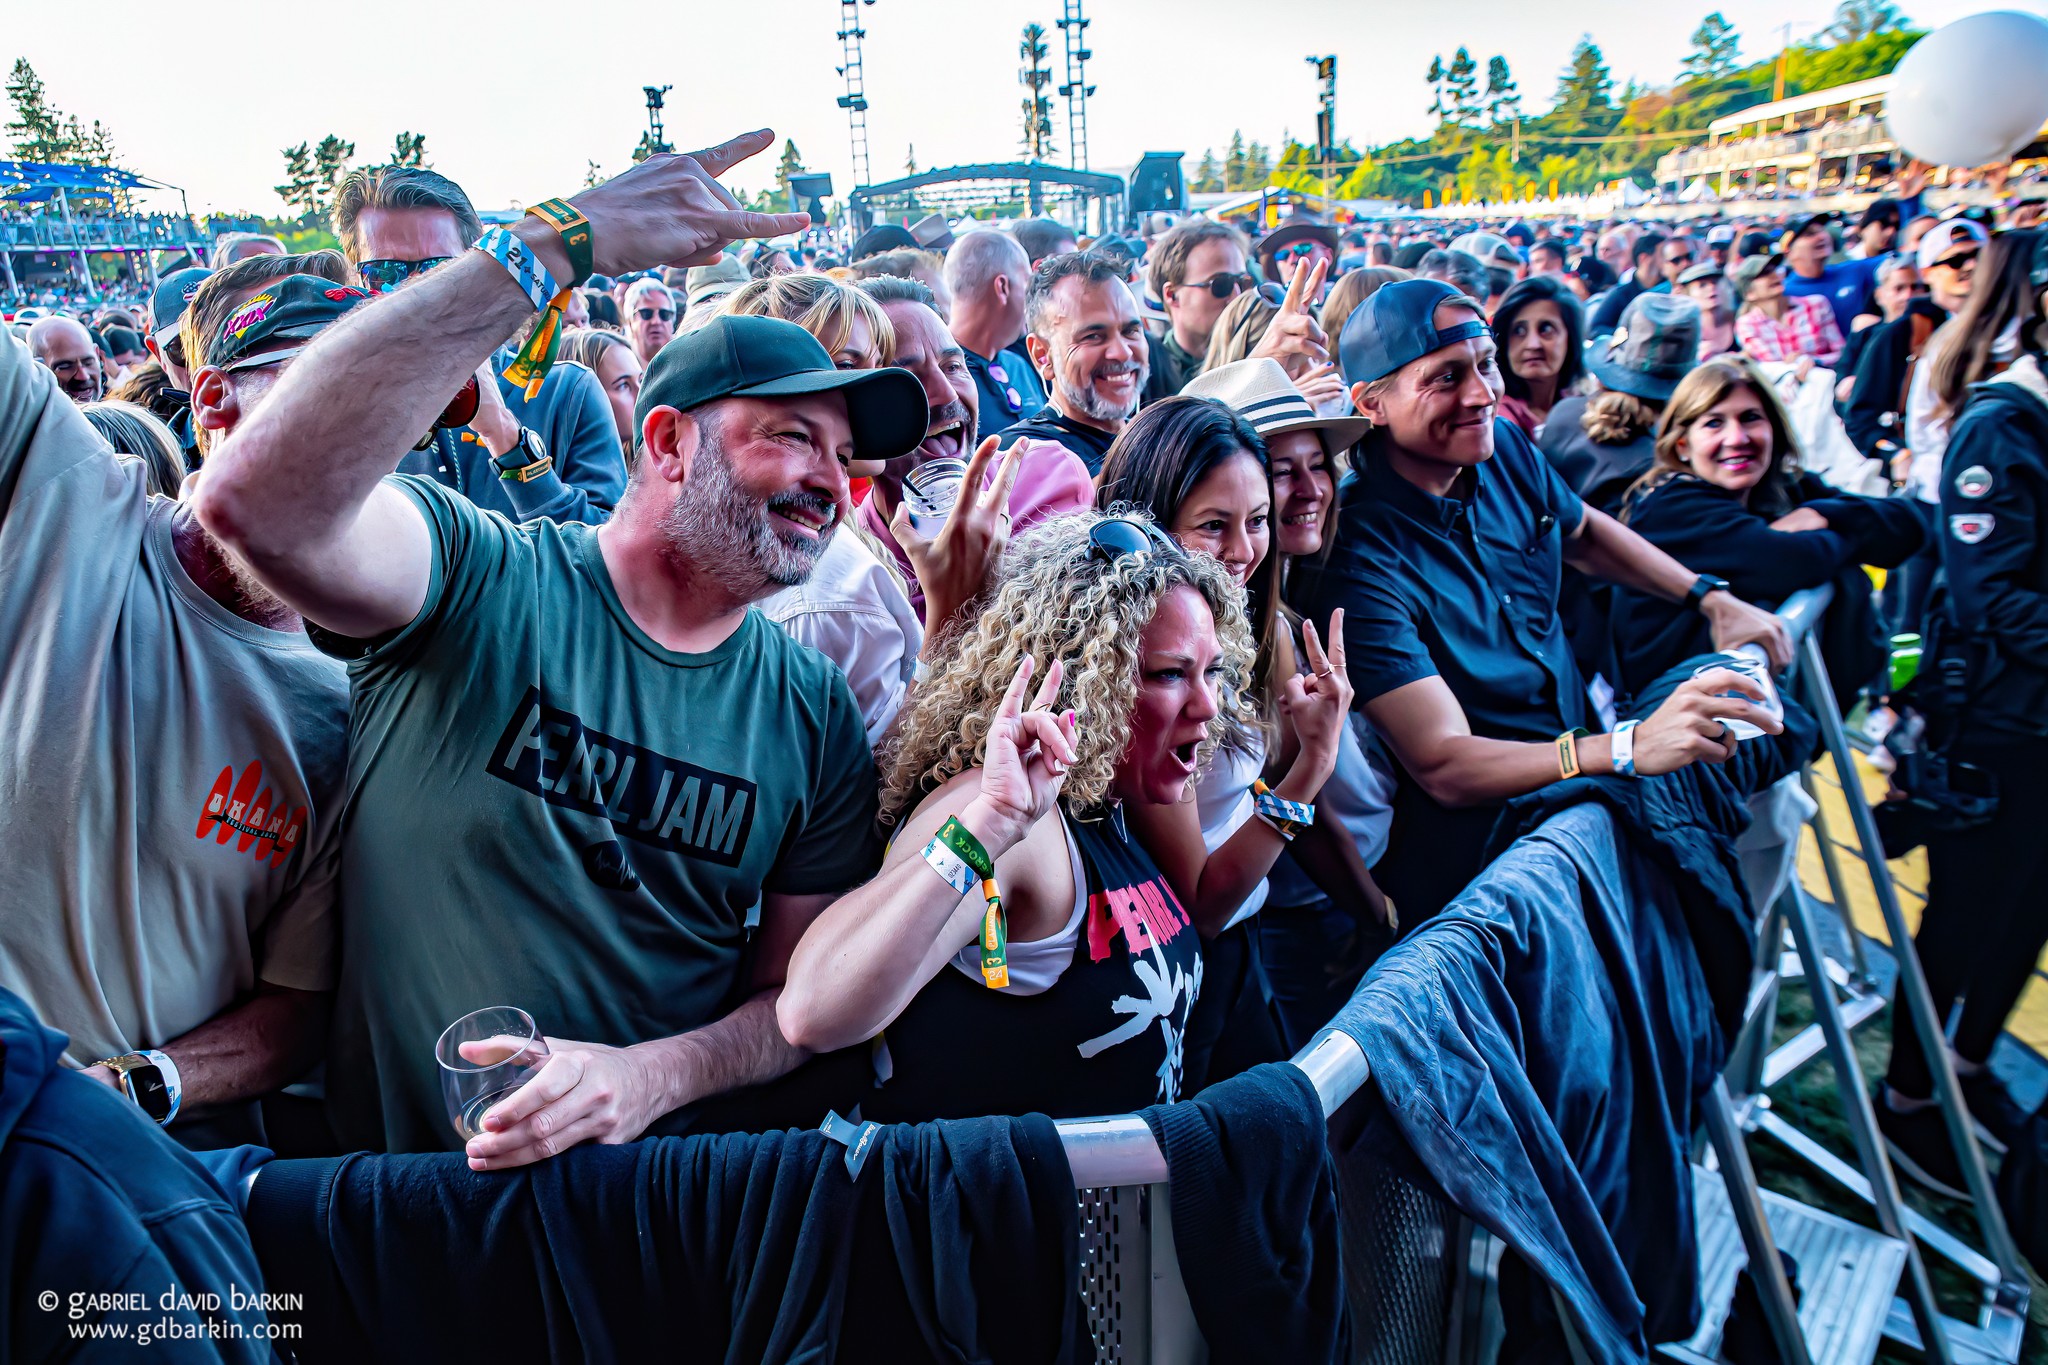 Pearl Jam fans at BottleRock Napa Valley